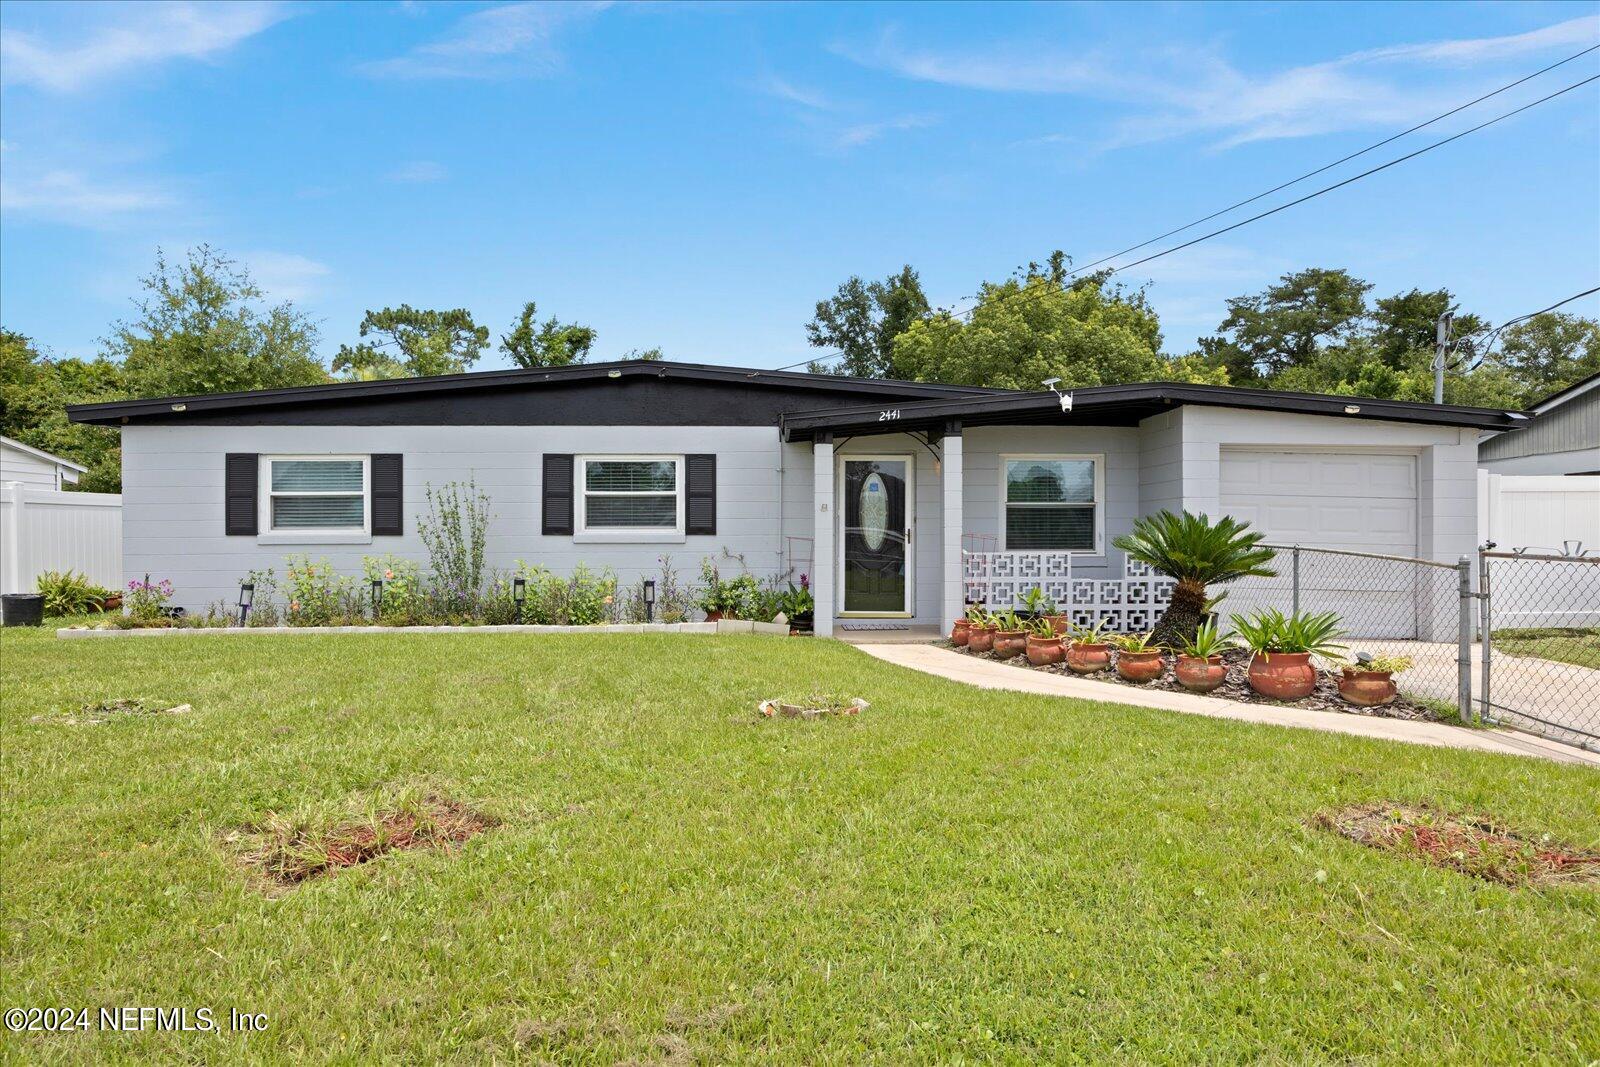 Jacksonville, FL home for sale located at 2441 Tulsa Road N, Jacksonville, FL 32218